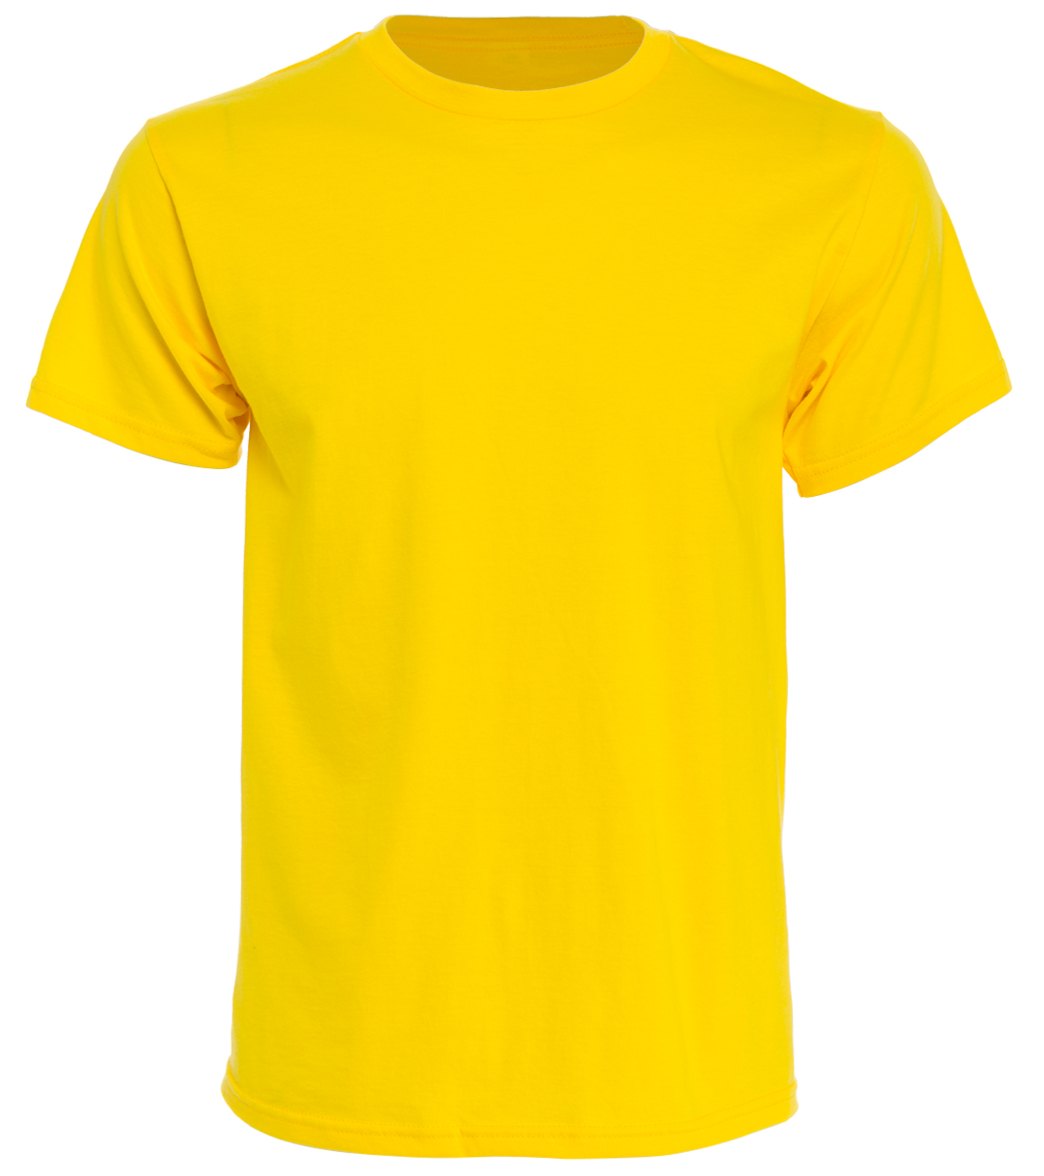 Men's Cotton Short Sleeve T-Shirt - Yellow Small - Swimoutlet.com